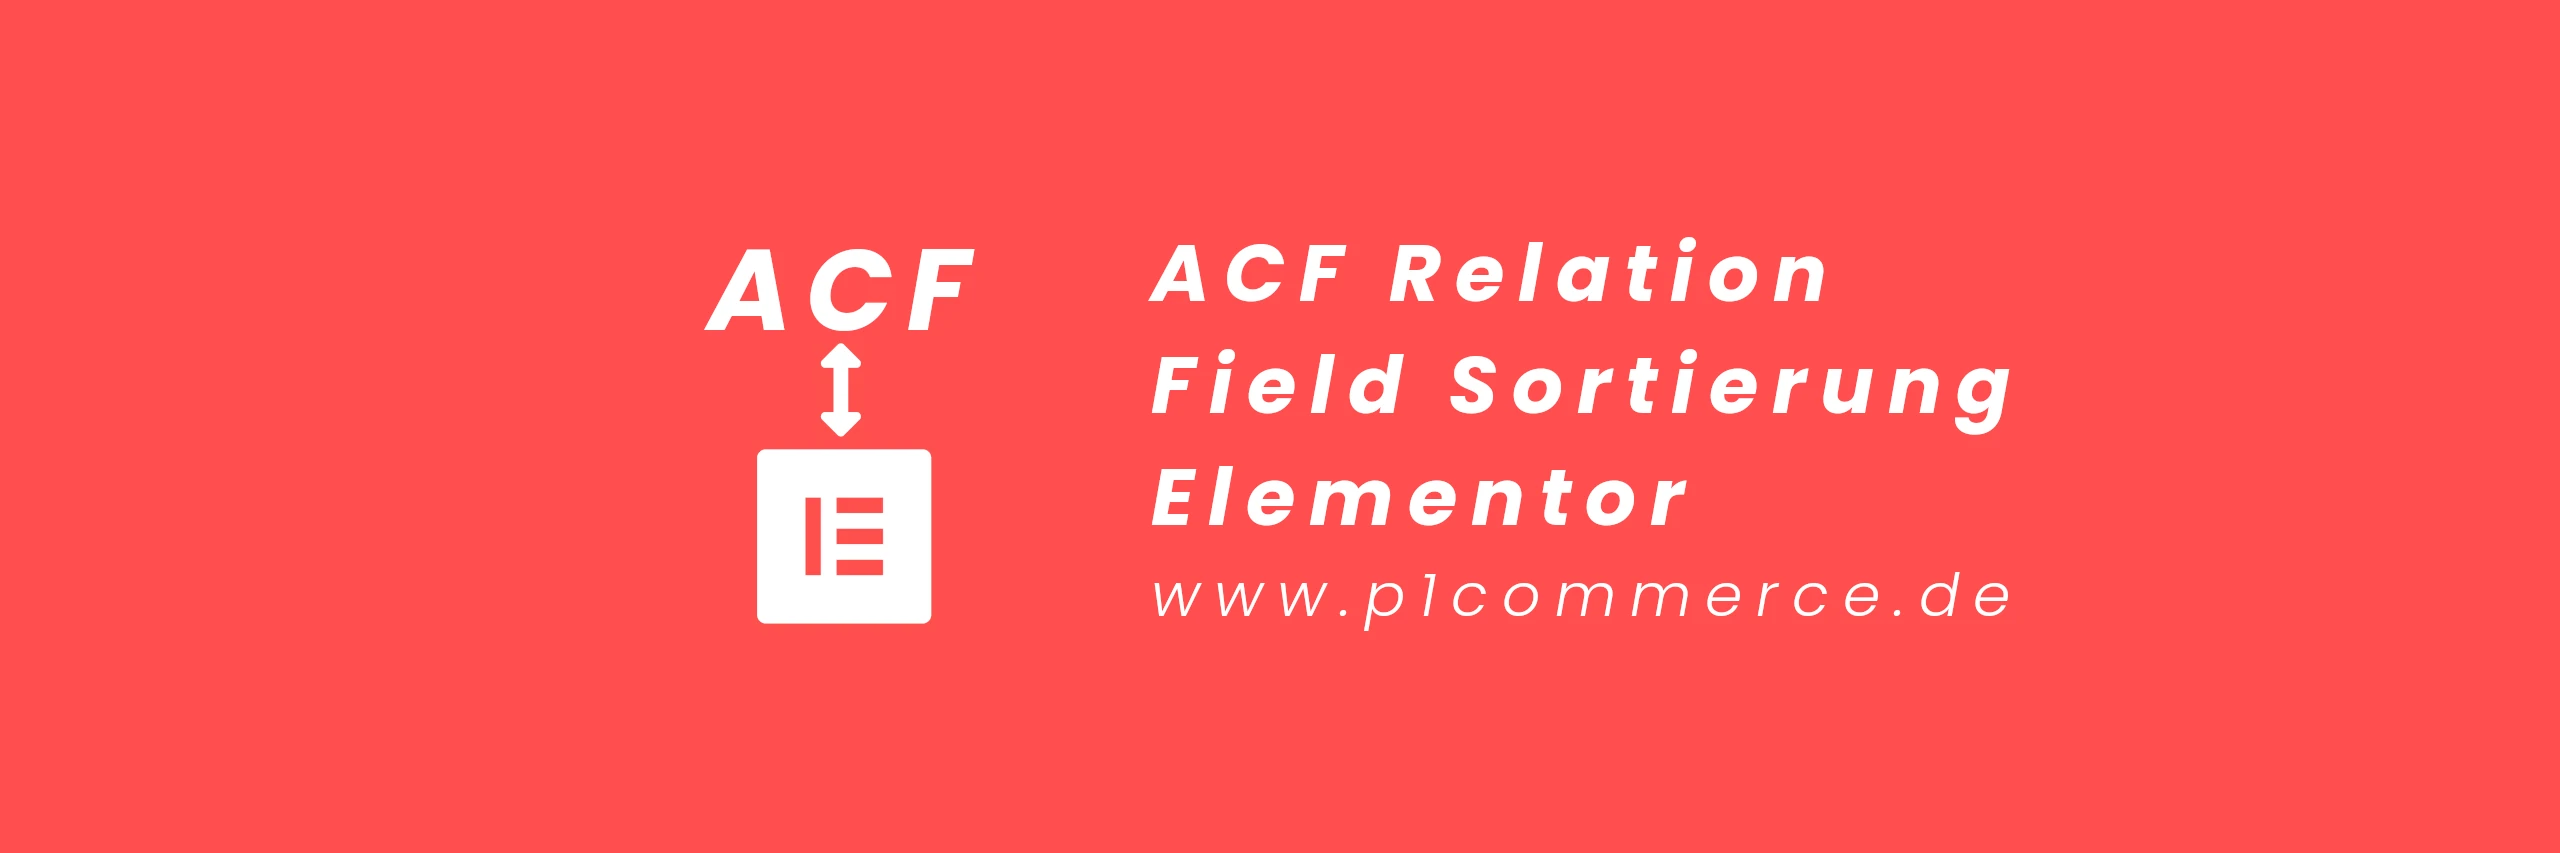 ACF Elementor Relationship Field